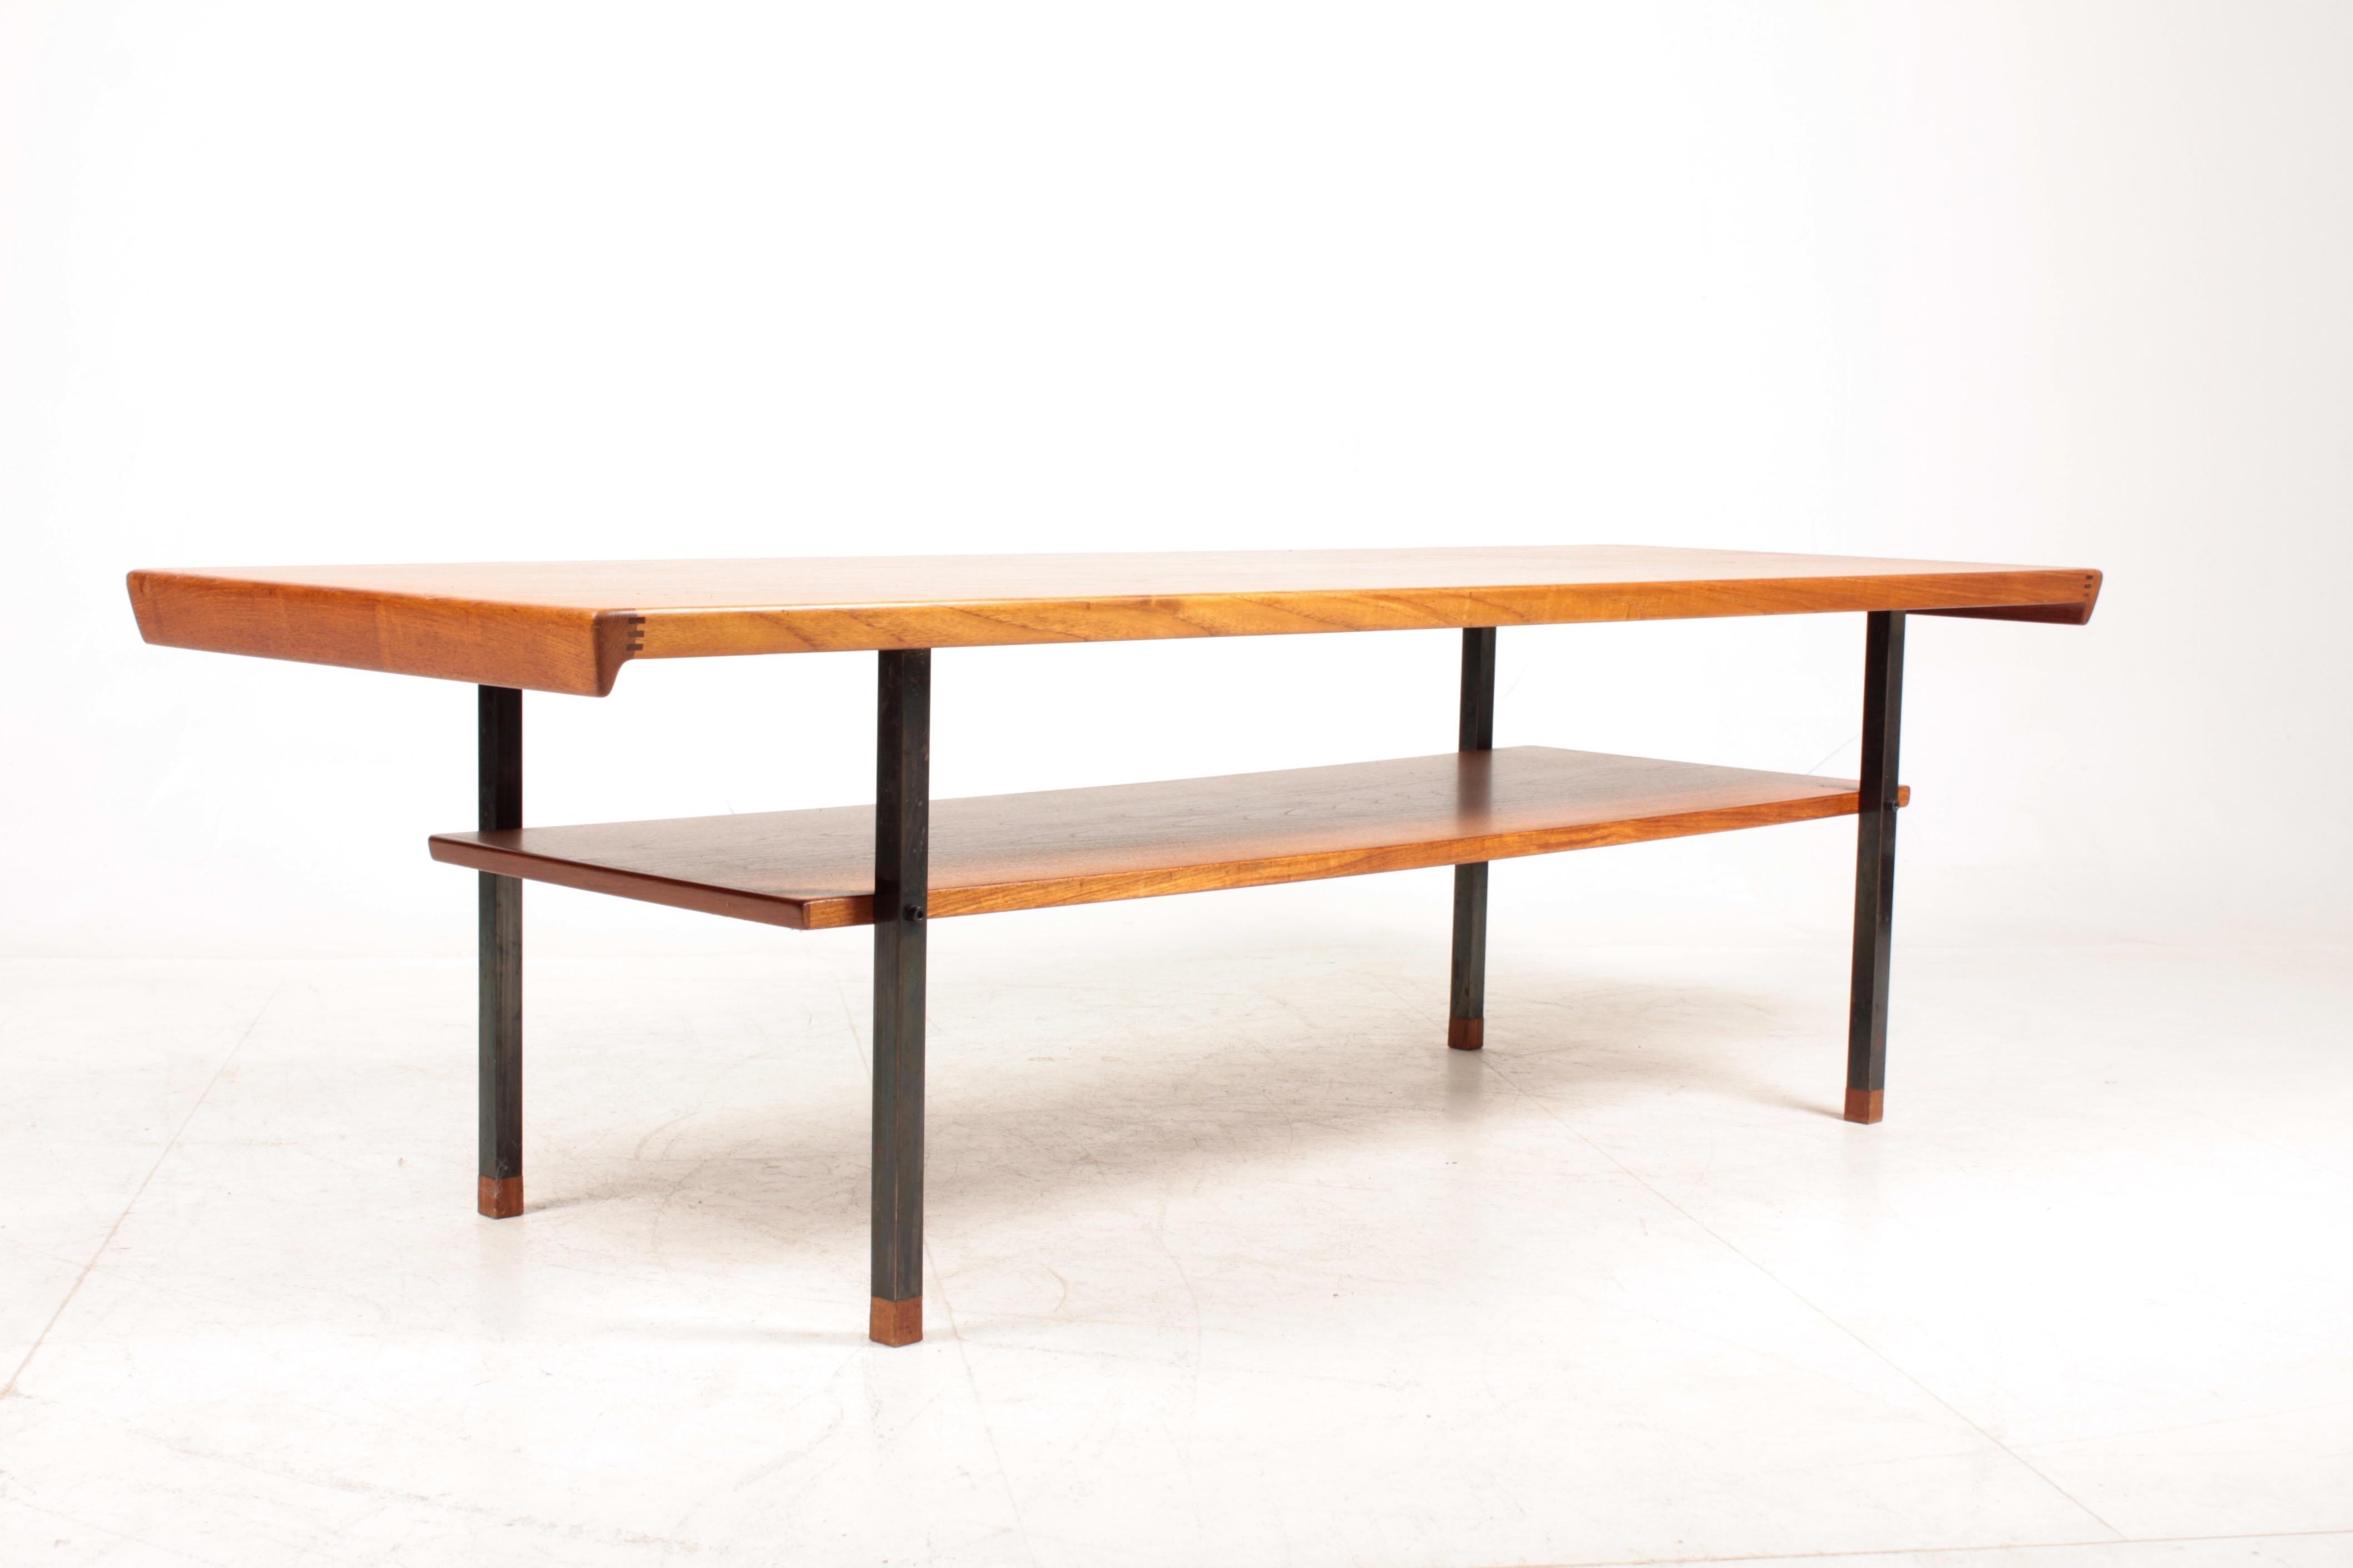 Low table in teak. Designed by Peter Hvidt and Orla Mølgaard for Søborg Møbler in 1960s. Made in Denmark. Great original condition.